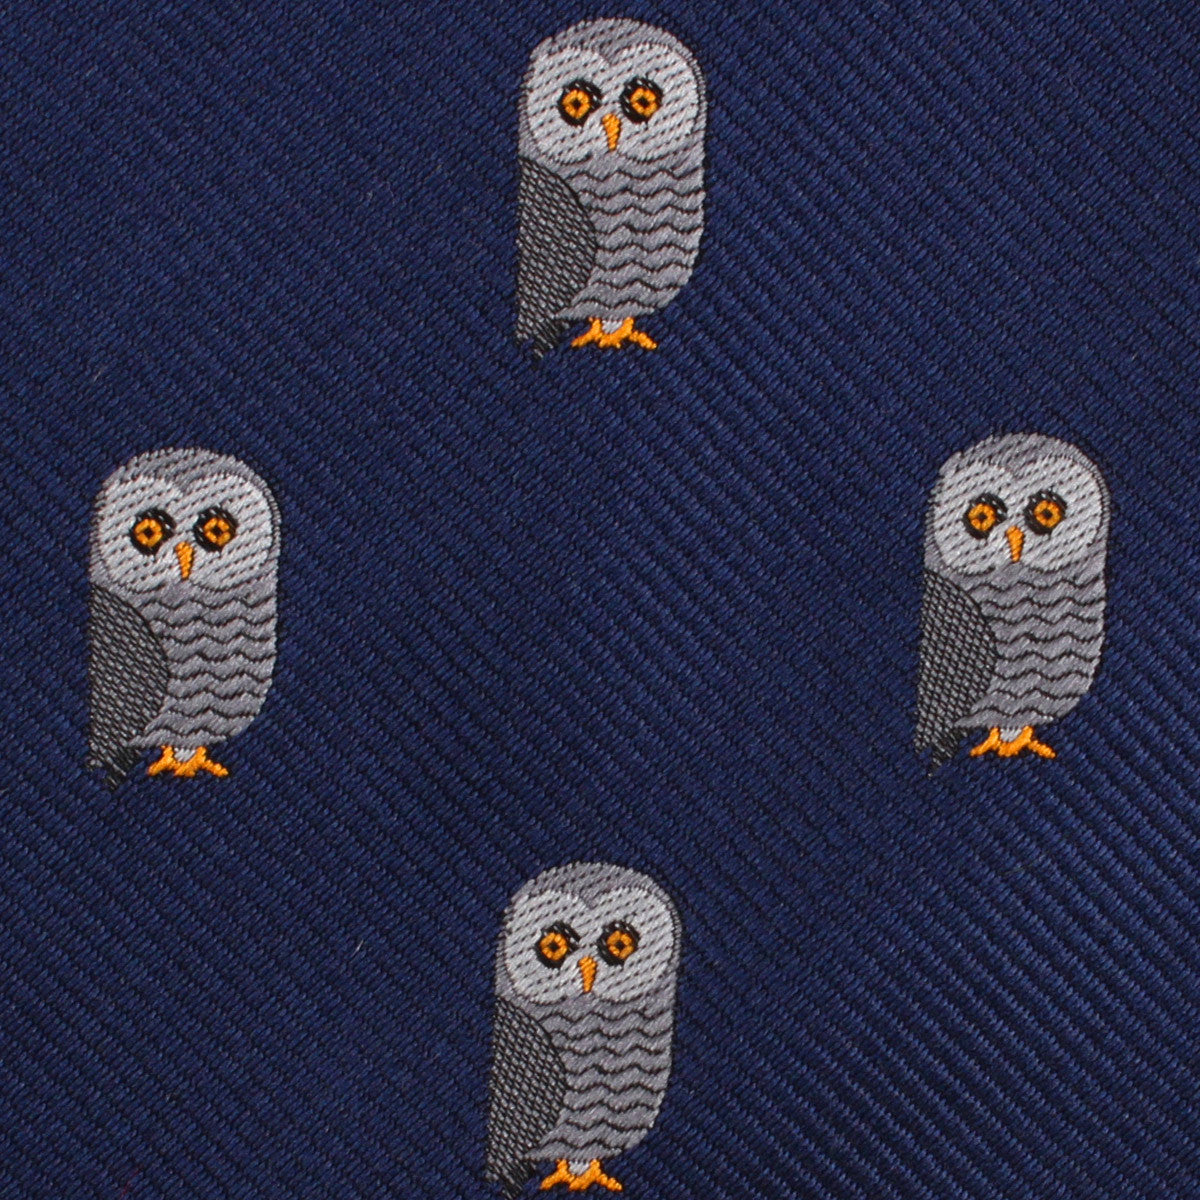 Southern Grey Owl Fabric Necktie